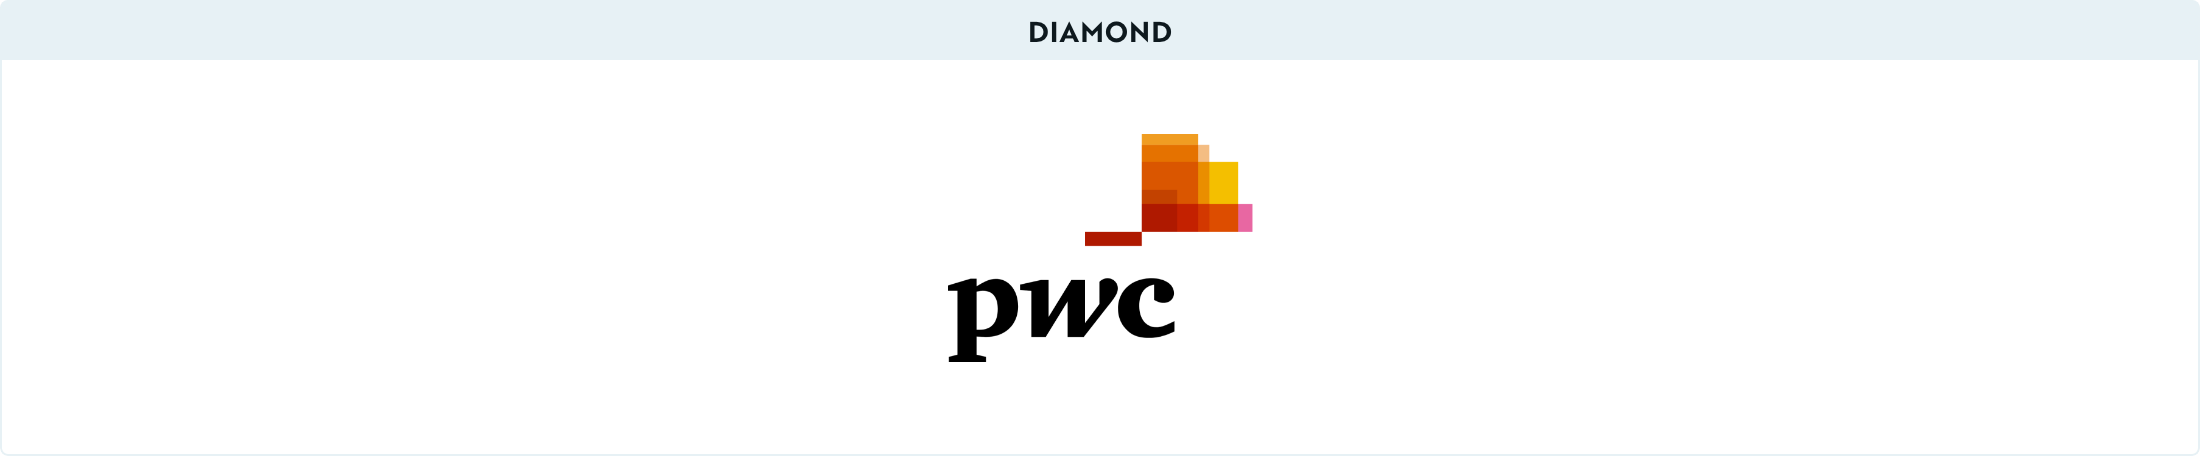 Sponsors-Diamond.png